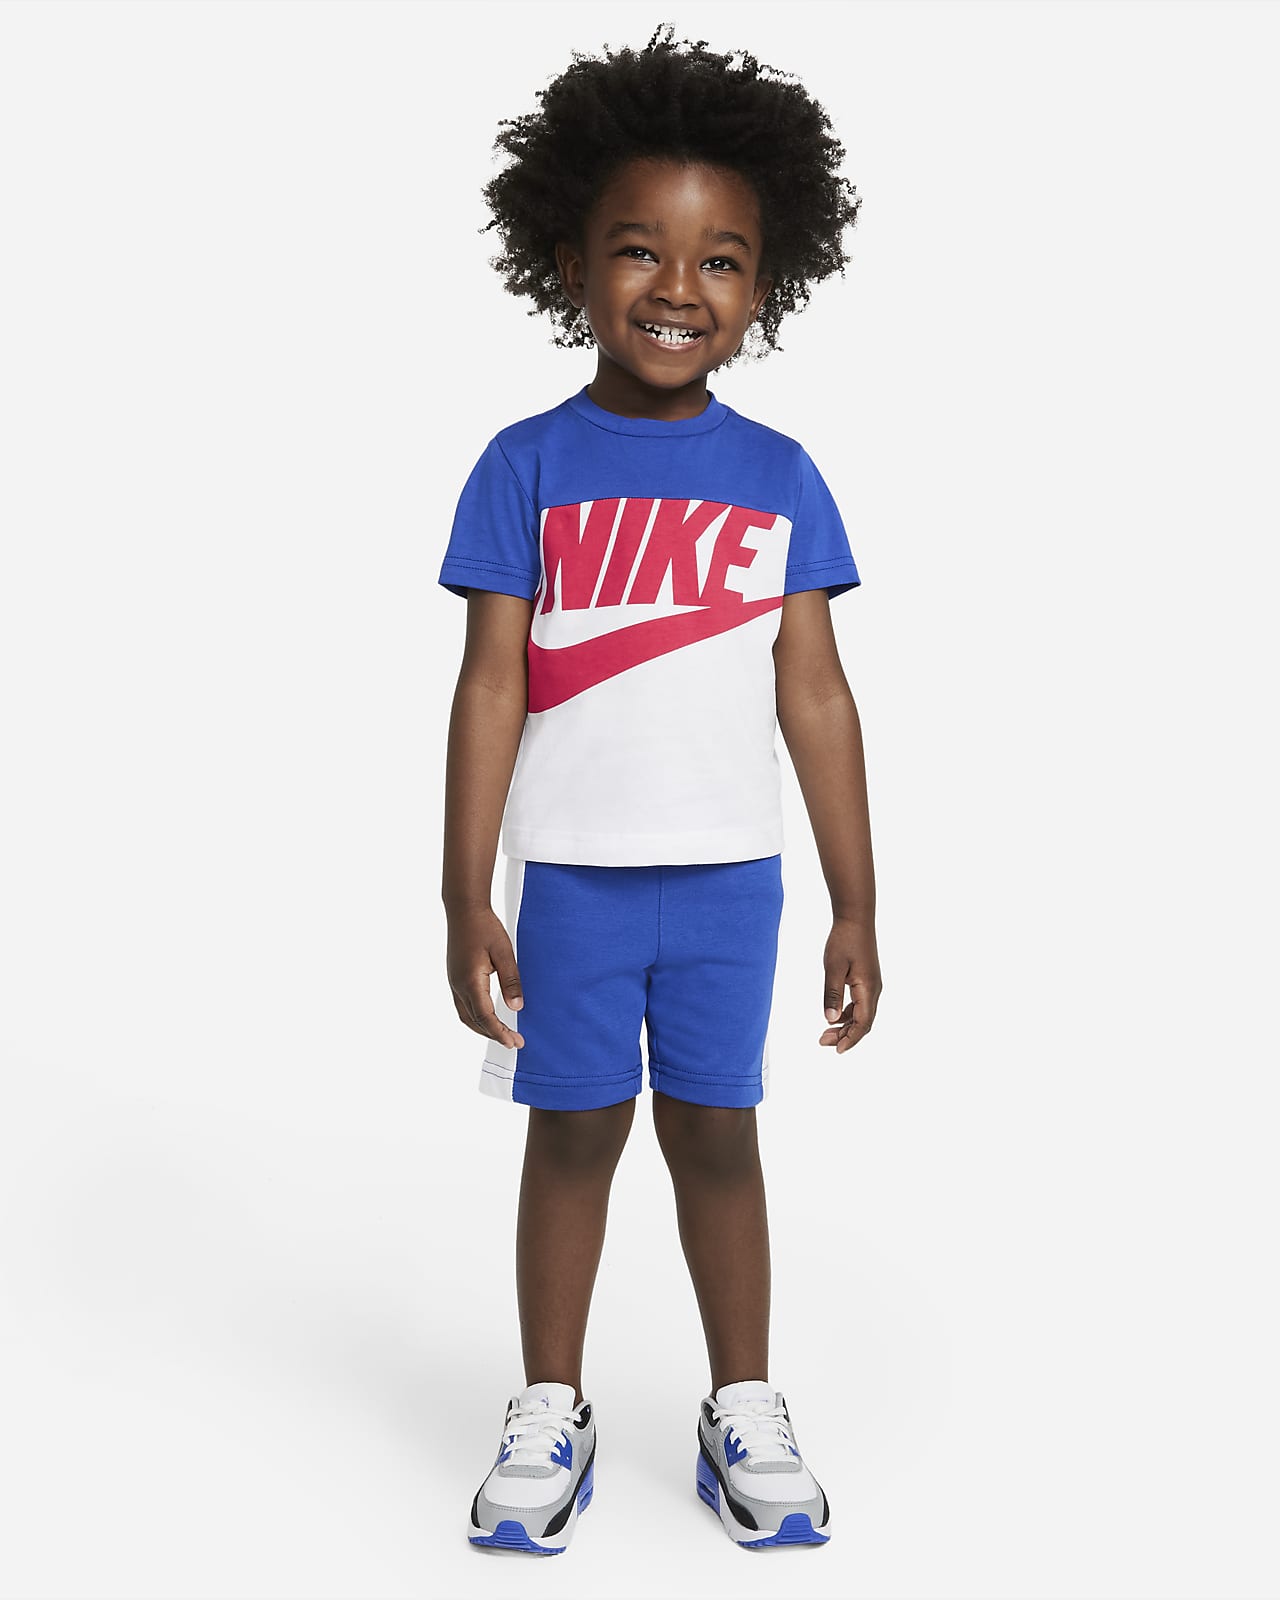 Nike Sportswear Toddler T-Shirt and 